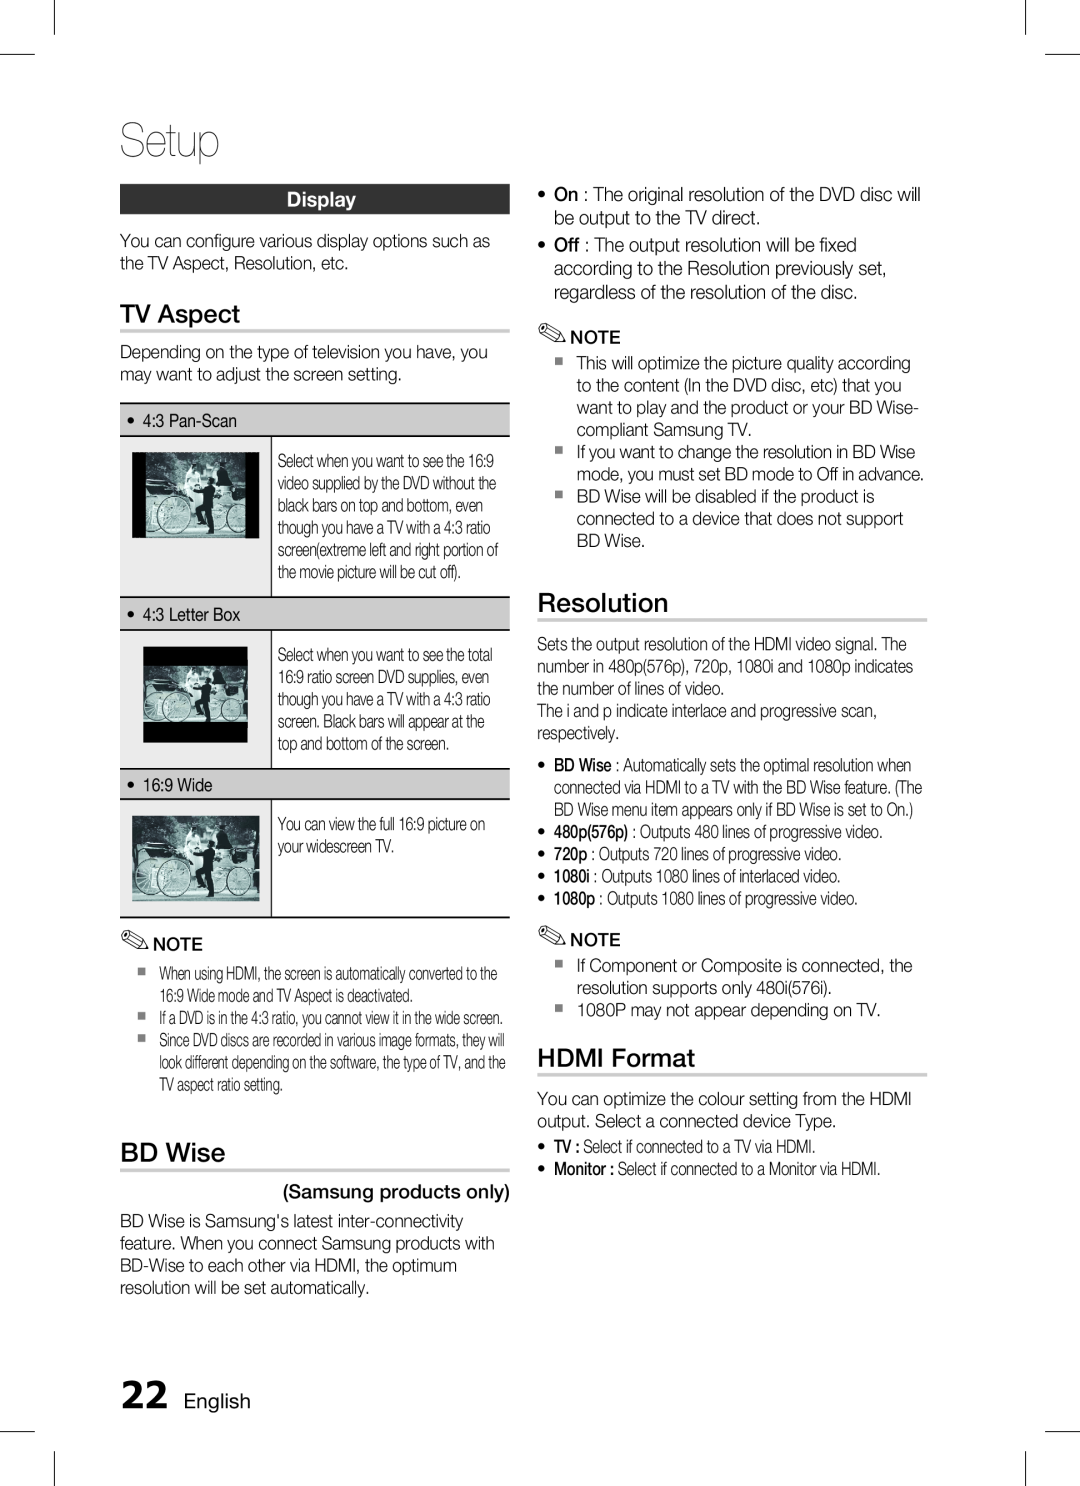 Samsung AH68-02293B, HT-C350 user manual TV Aspect, BD Wise, Resolution, HDMI Format, Display, Setup 